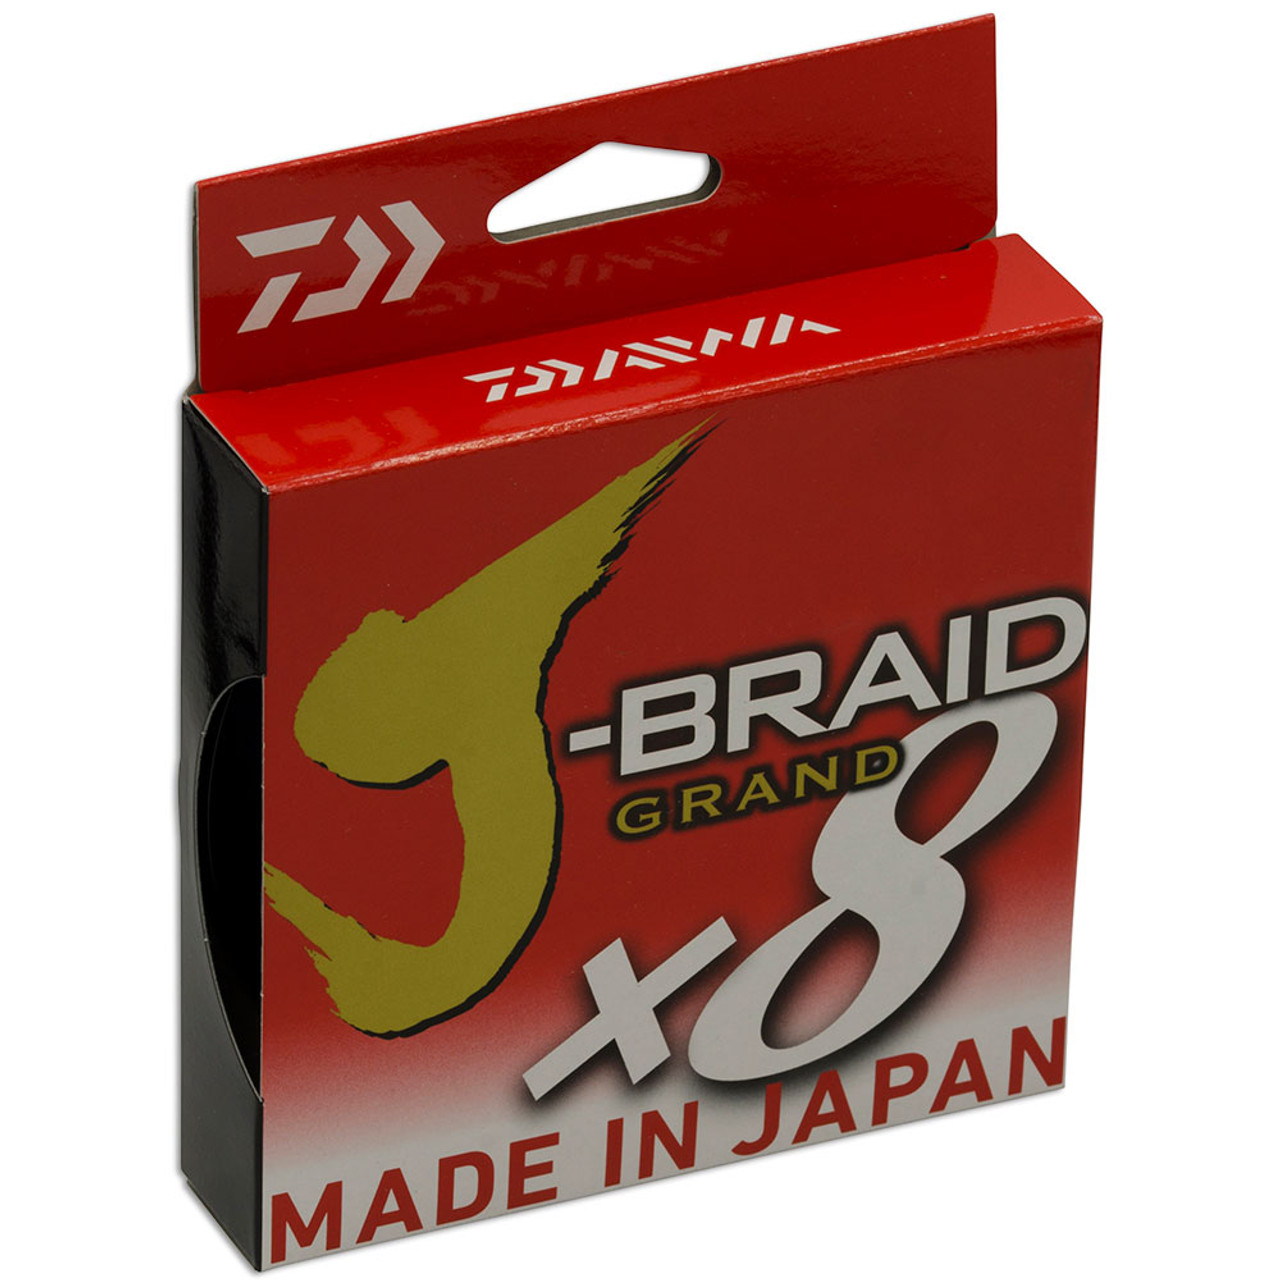  Customer reviews: Daiwa, J-Braid x8 Grand Braided Line, 150  Yards, 20 lb Tested, .009" Diameter, Island Blue